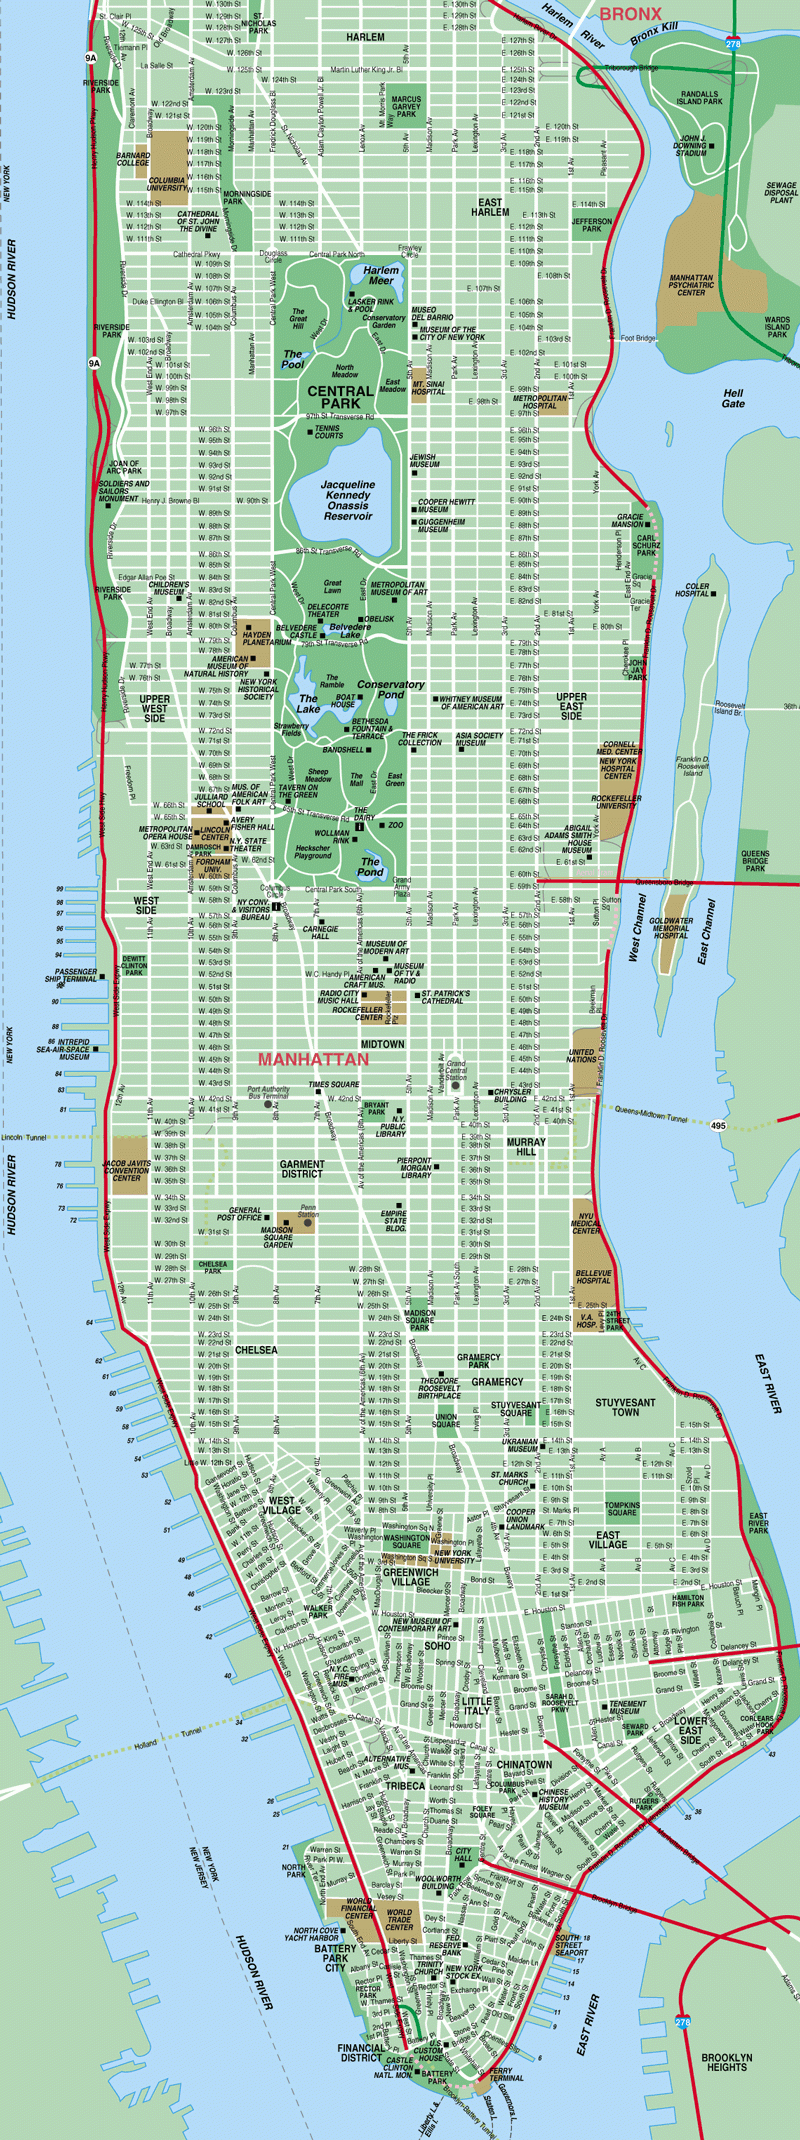 Printable Map Of Manhattan | The International House Is Just To The - Free Printable Map Of Manhattan